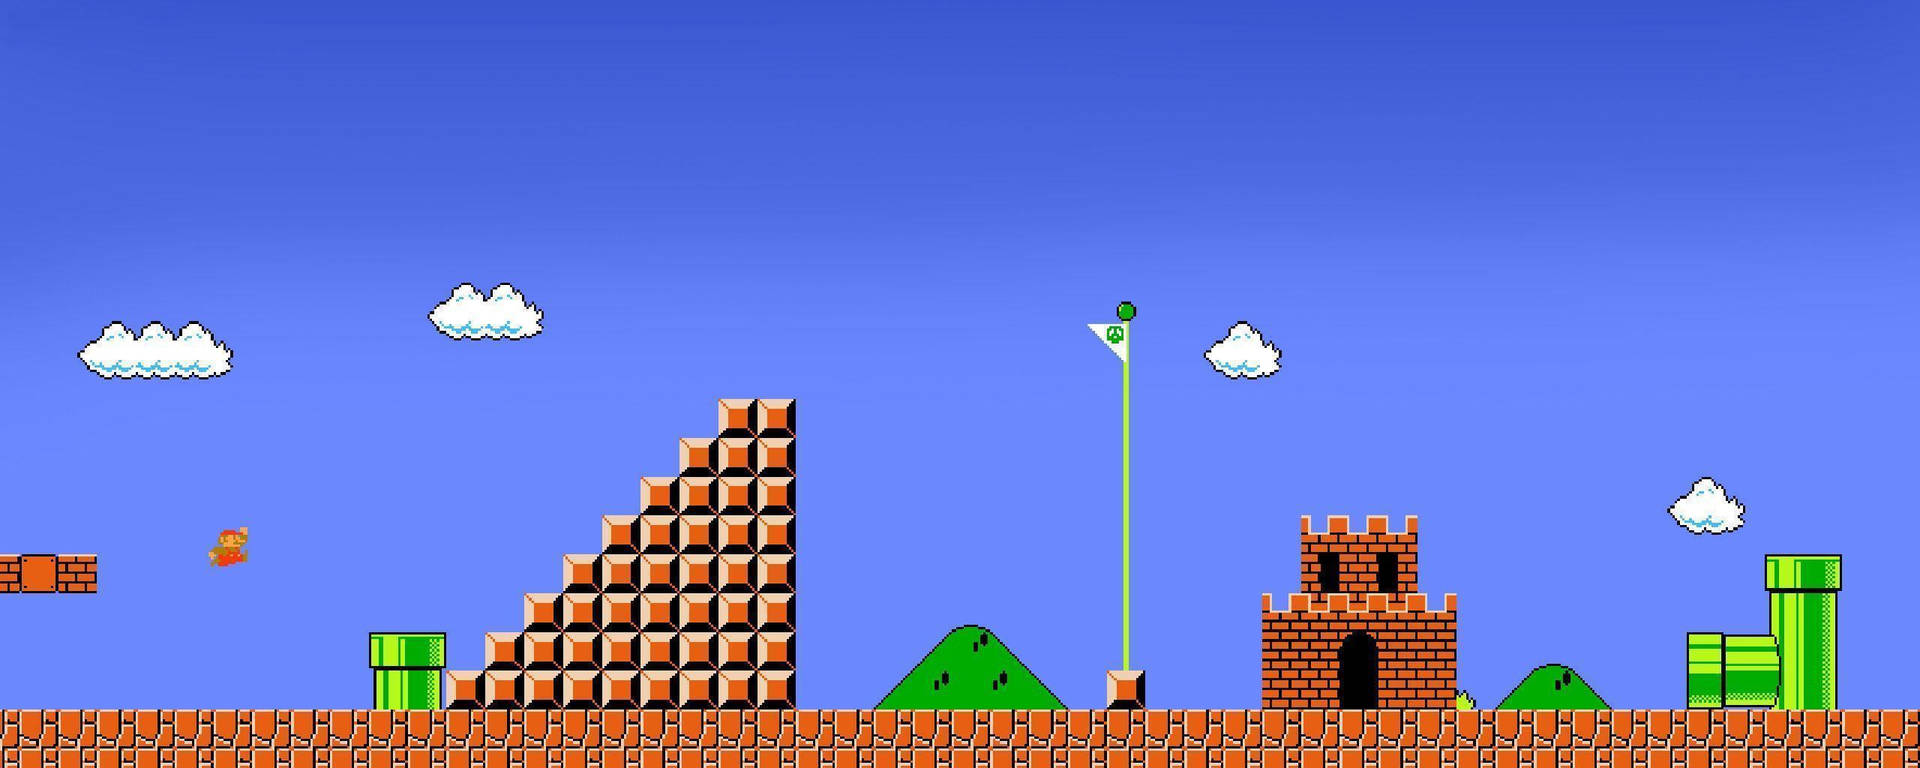 Video Game Interface Of Super Mario Bros Wallpaper